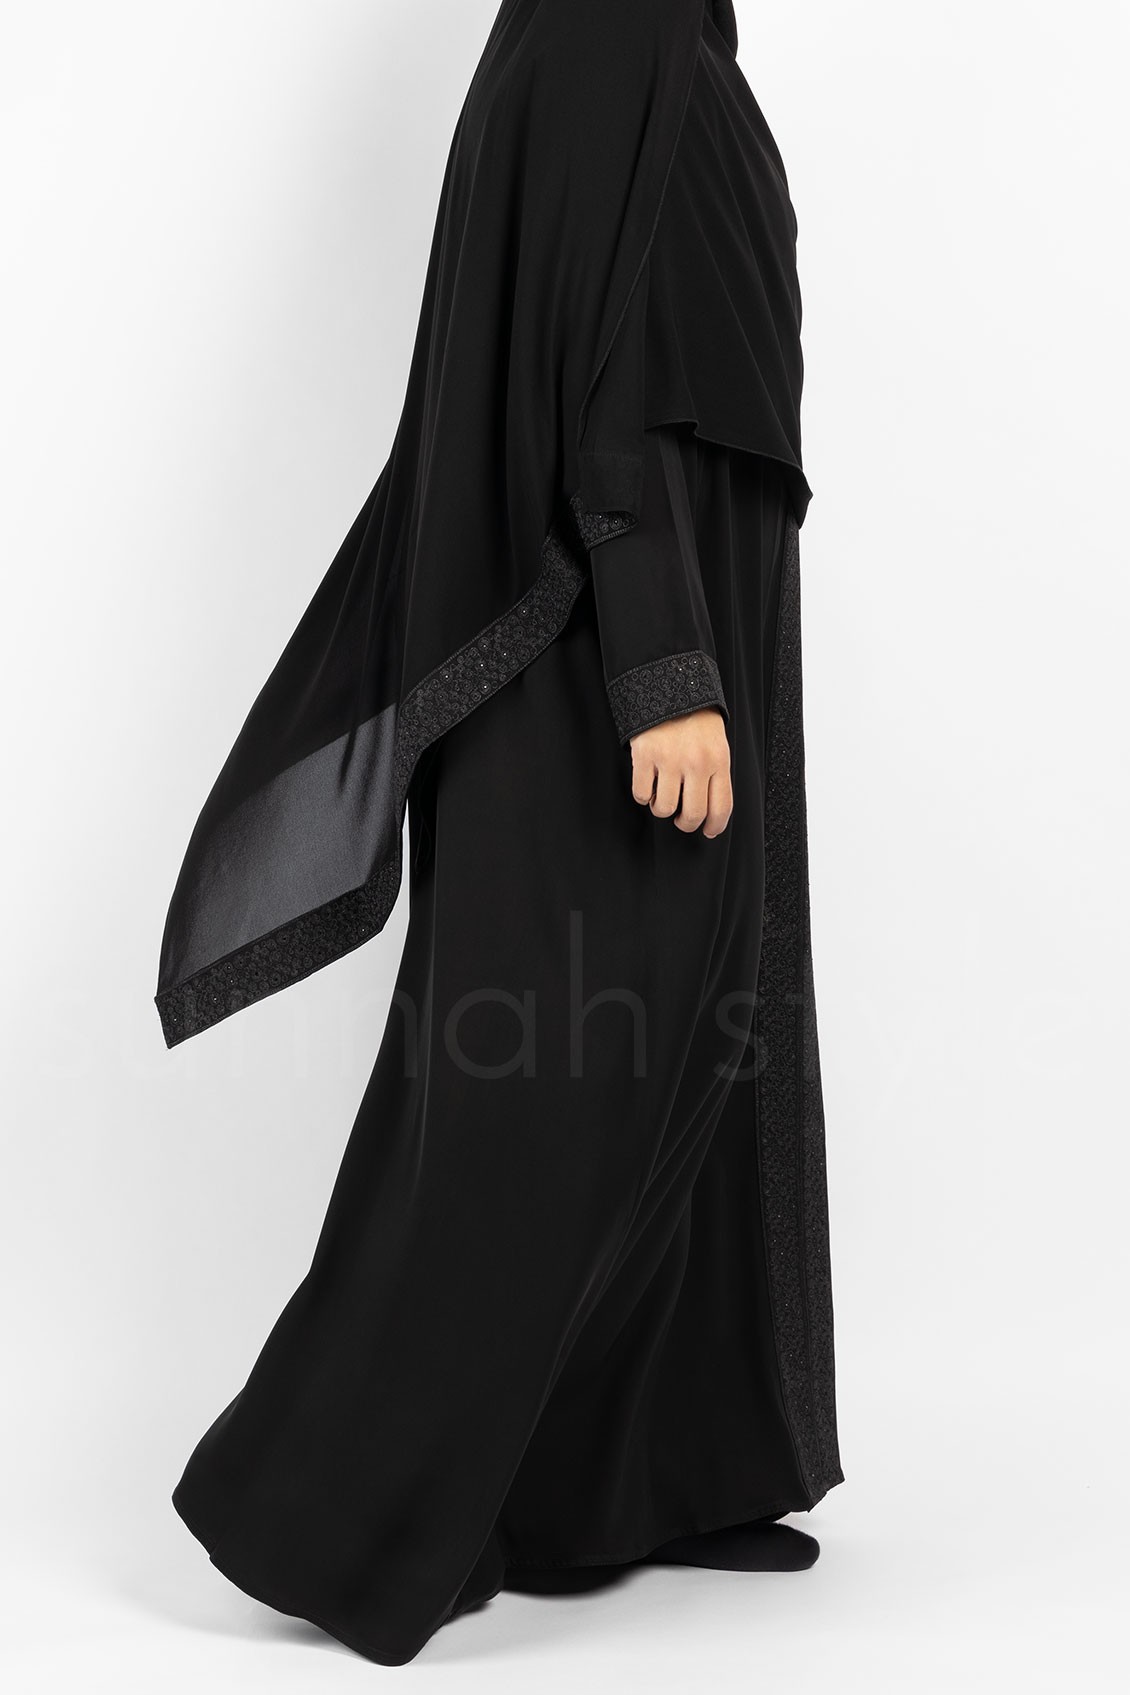 Sunnah Style Glimmer Embroidered Abaya Black